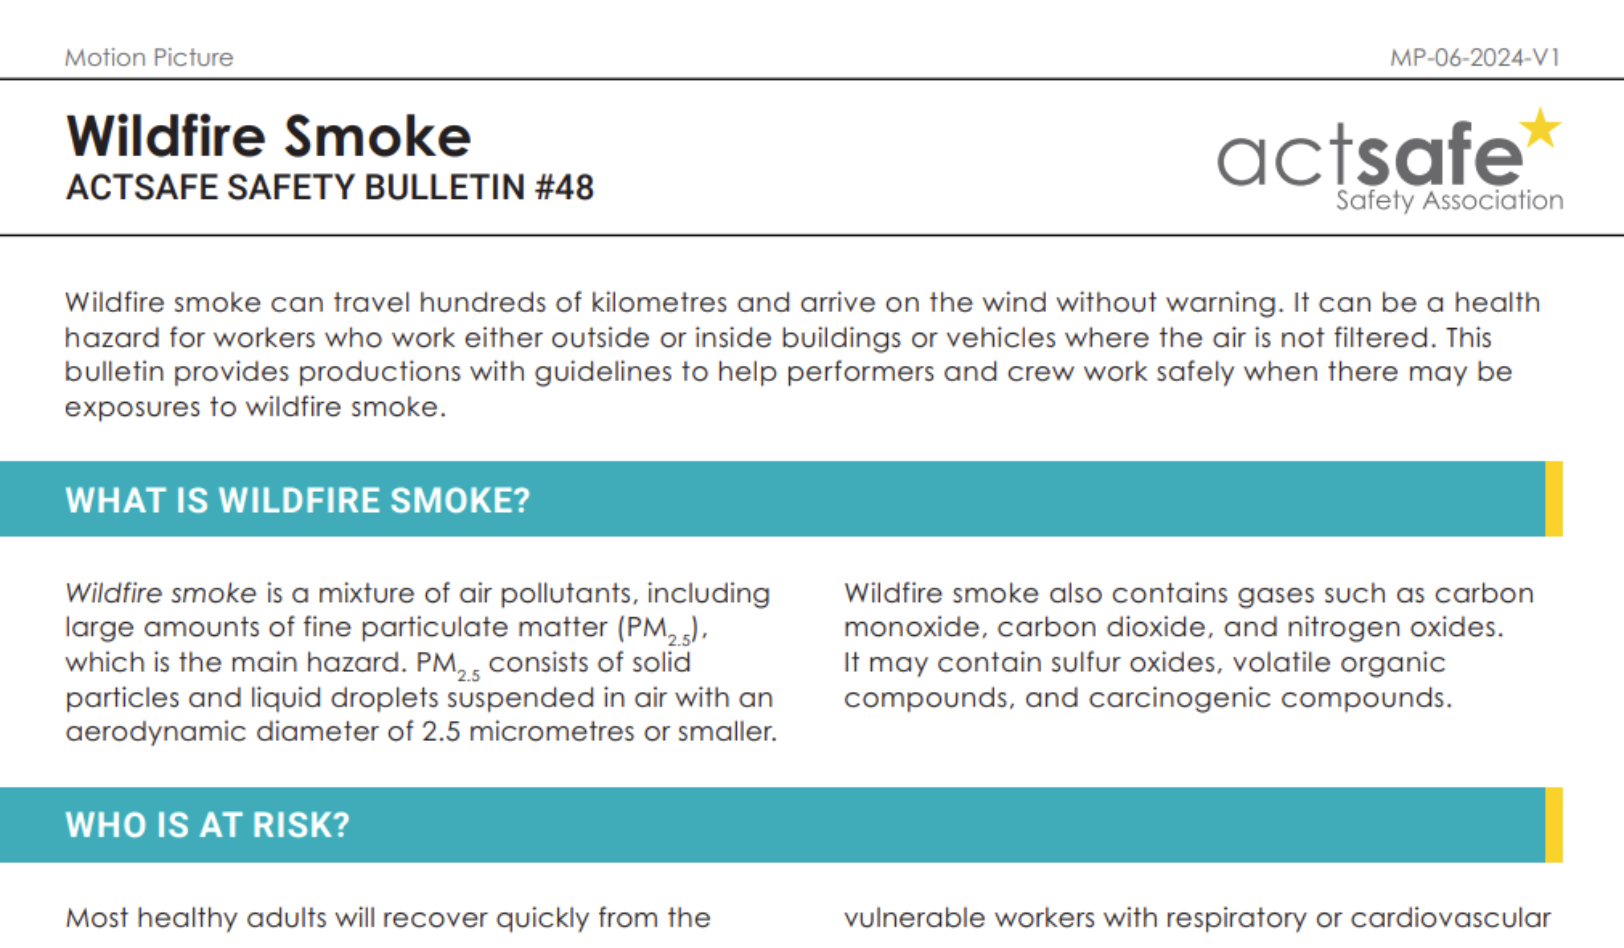 #48 Wildfire Smoke Safety Bulletin